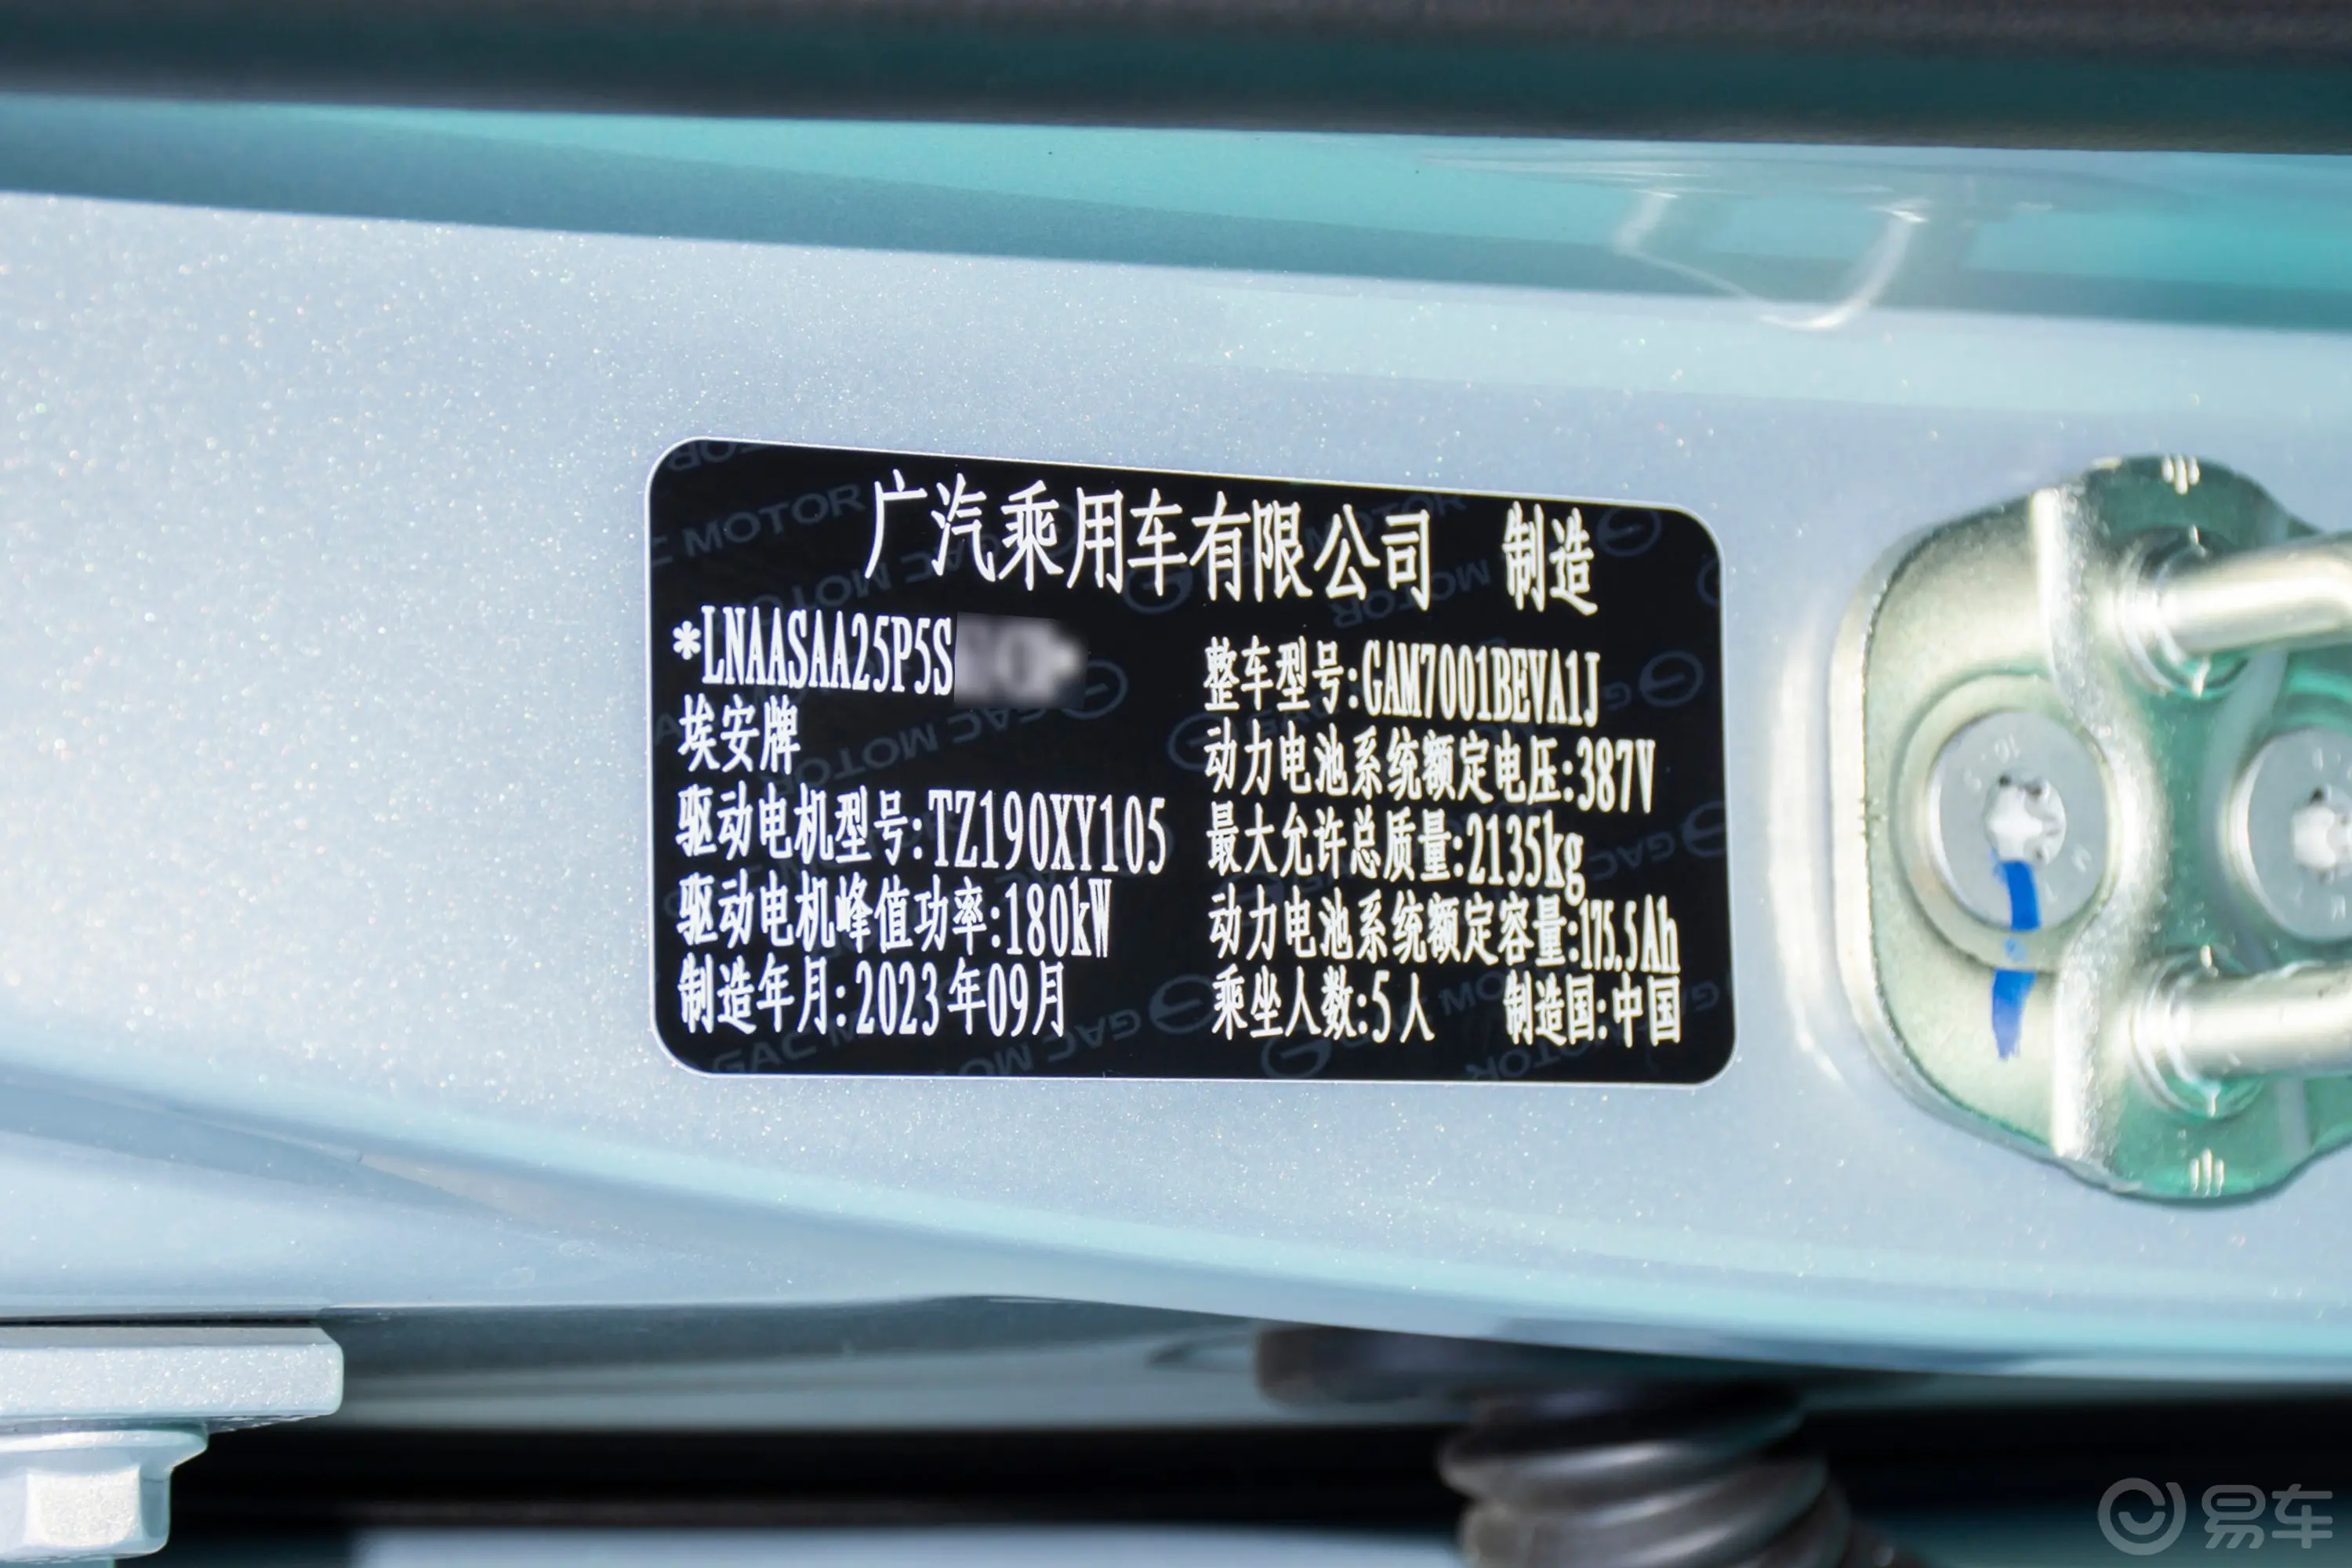 AION SMAX 610km 80 星瀚版 67.9kWh车辆信息铭牌